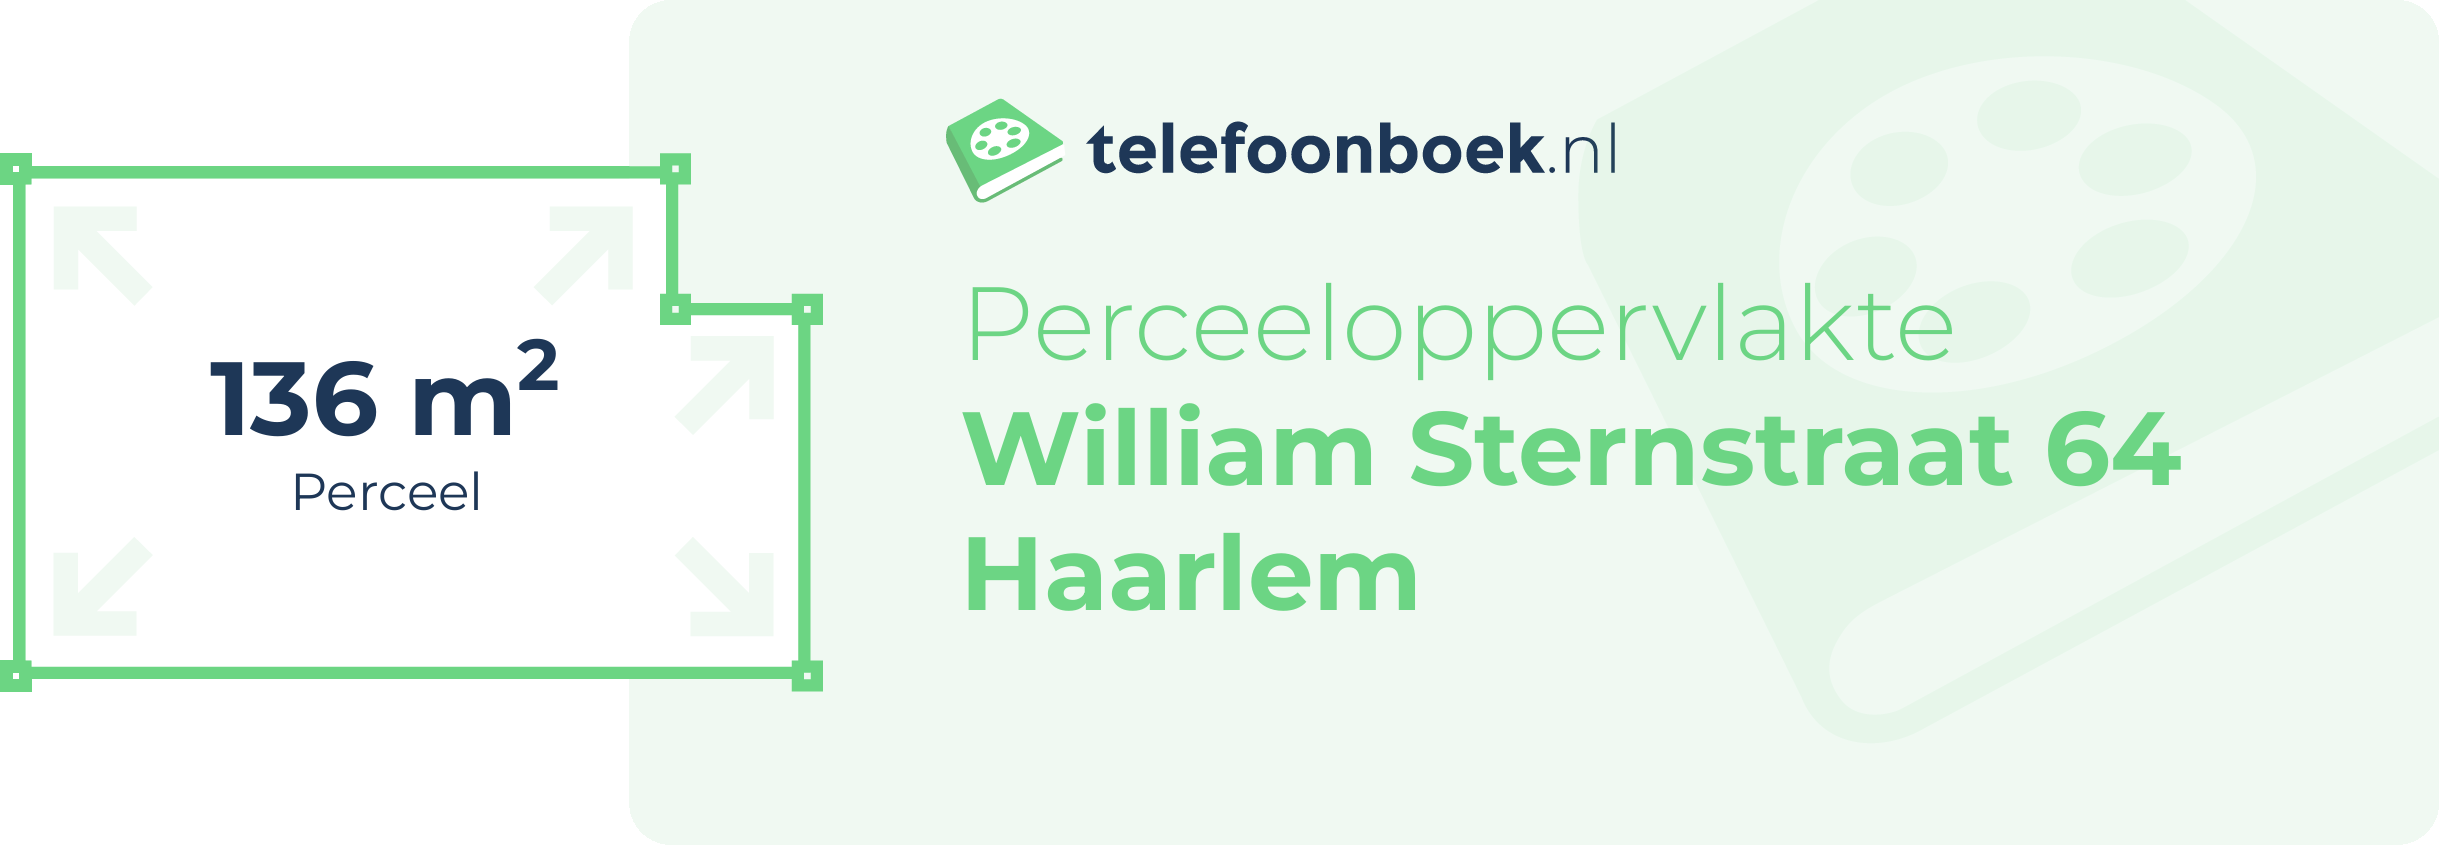 Perceeloppervlakte William Sternstraat 64 Haarlem